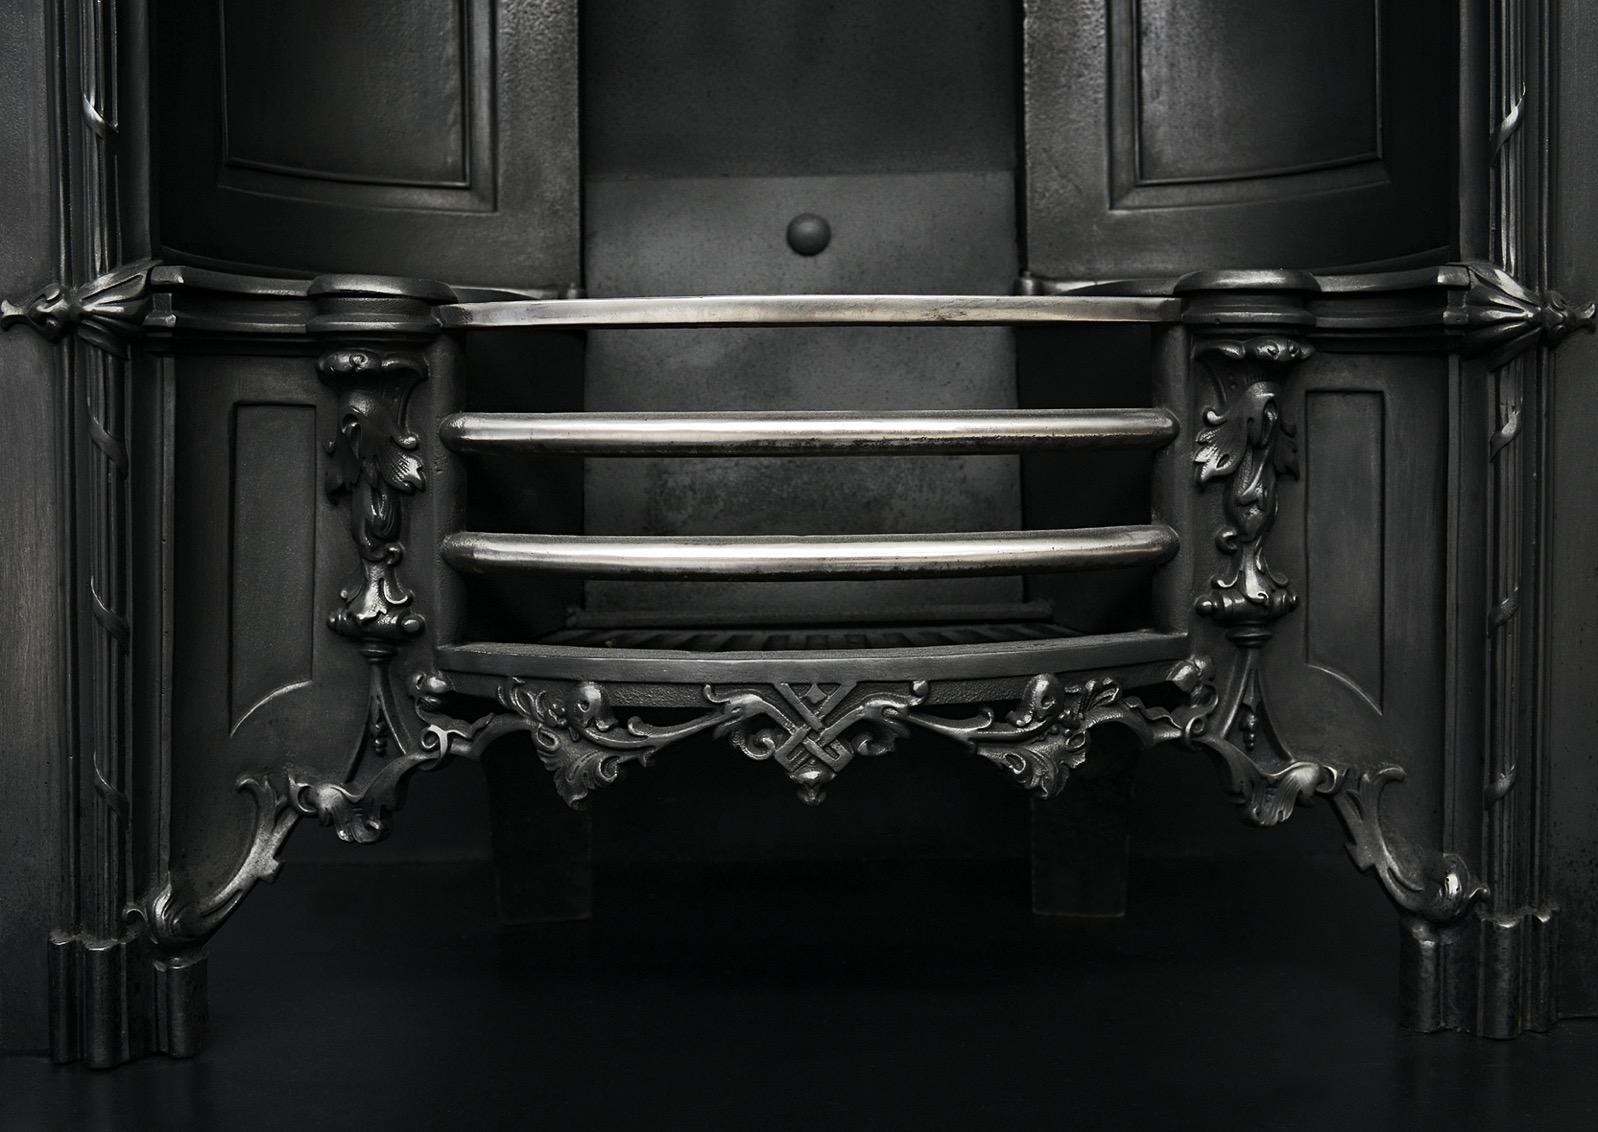 cast iron fireplace